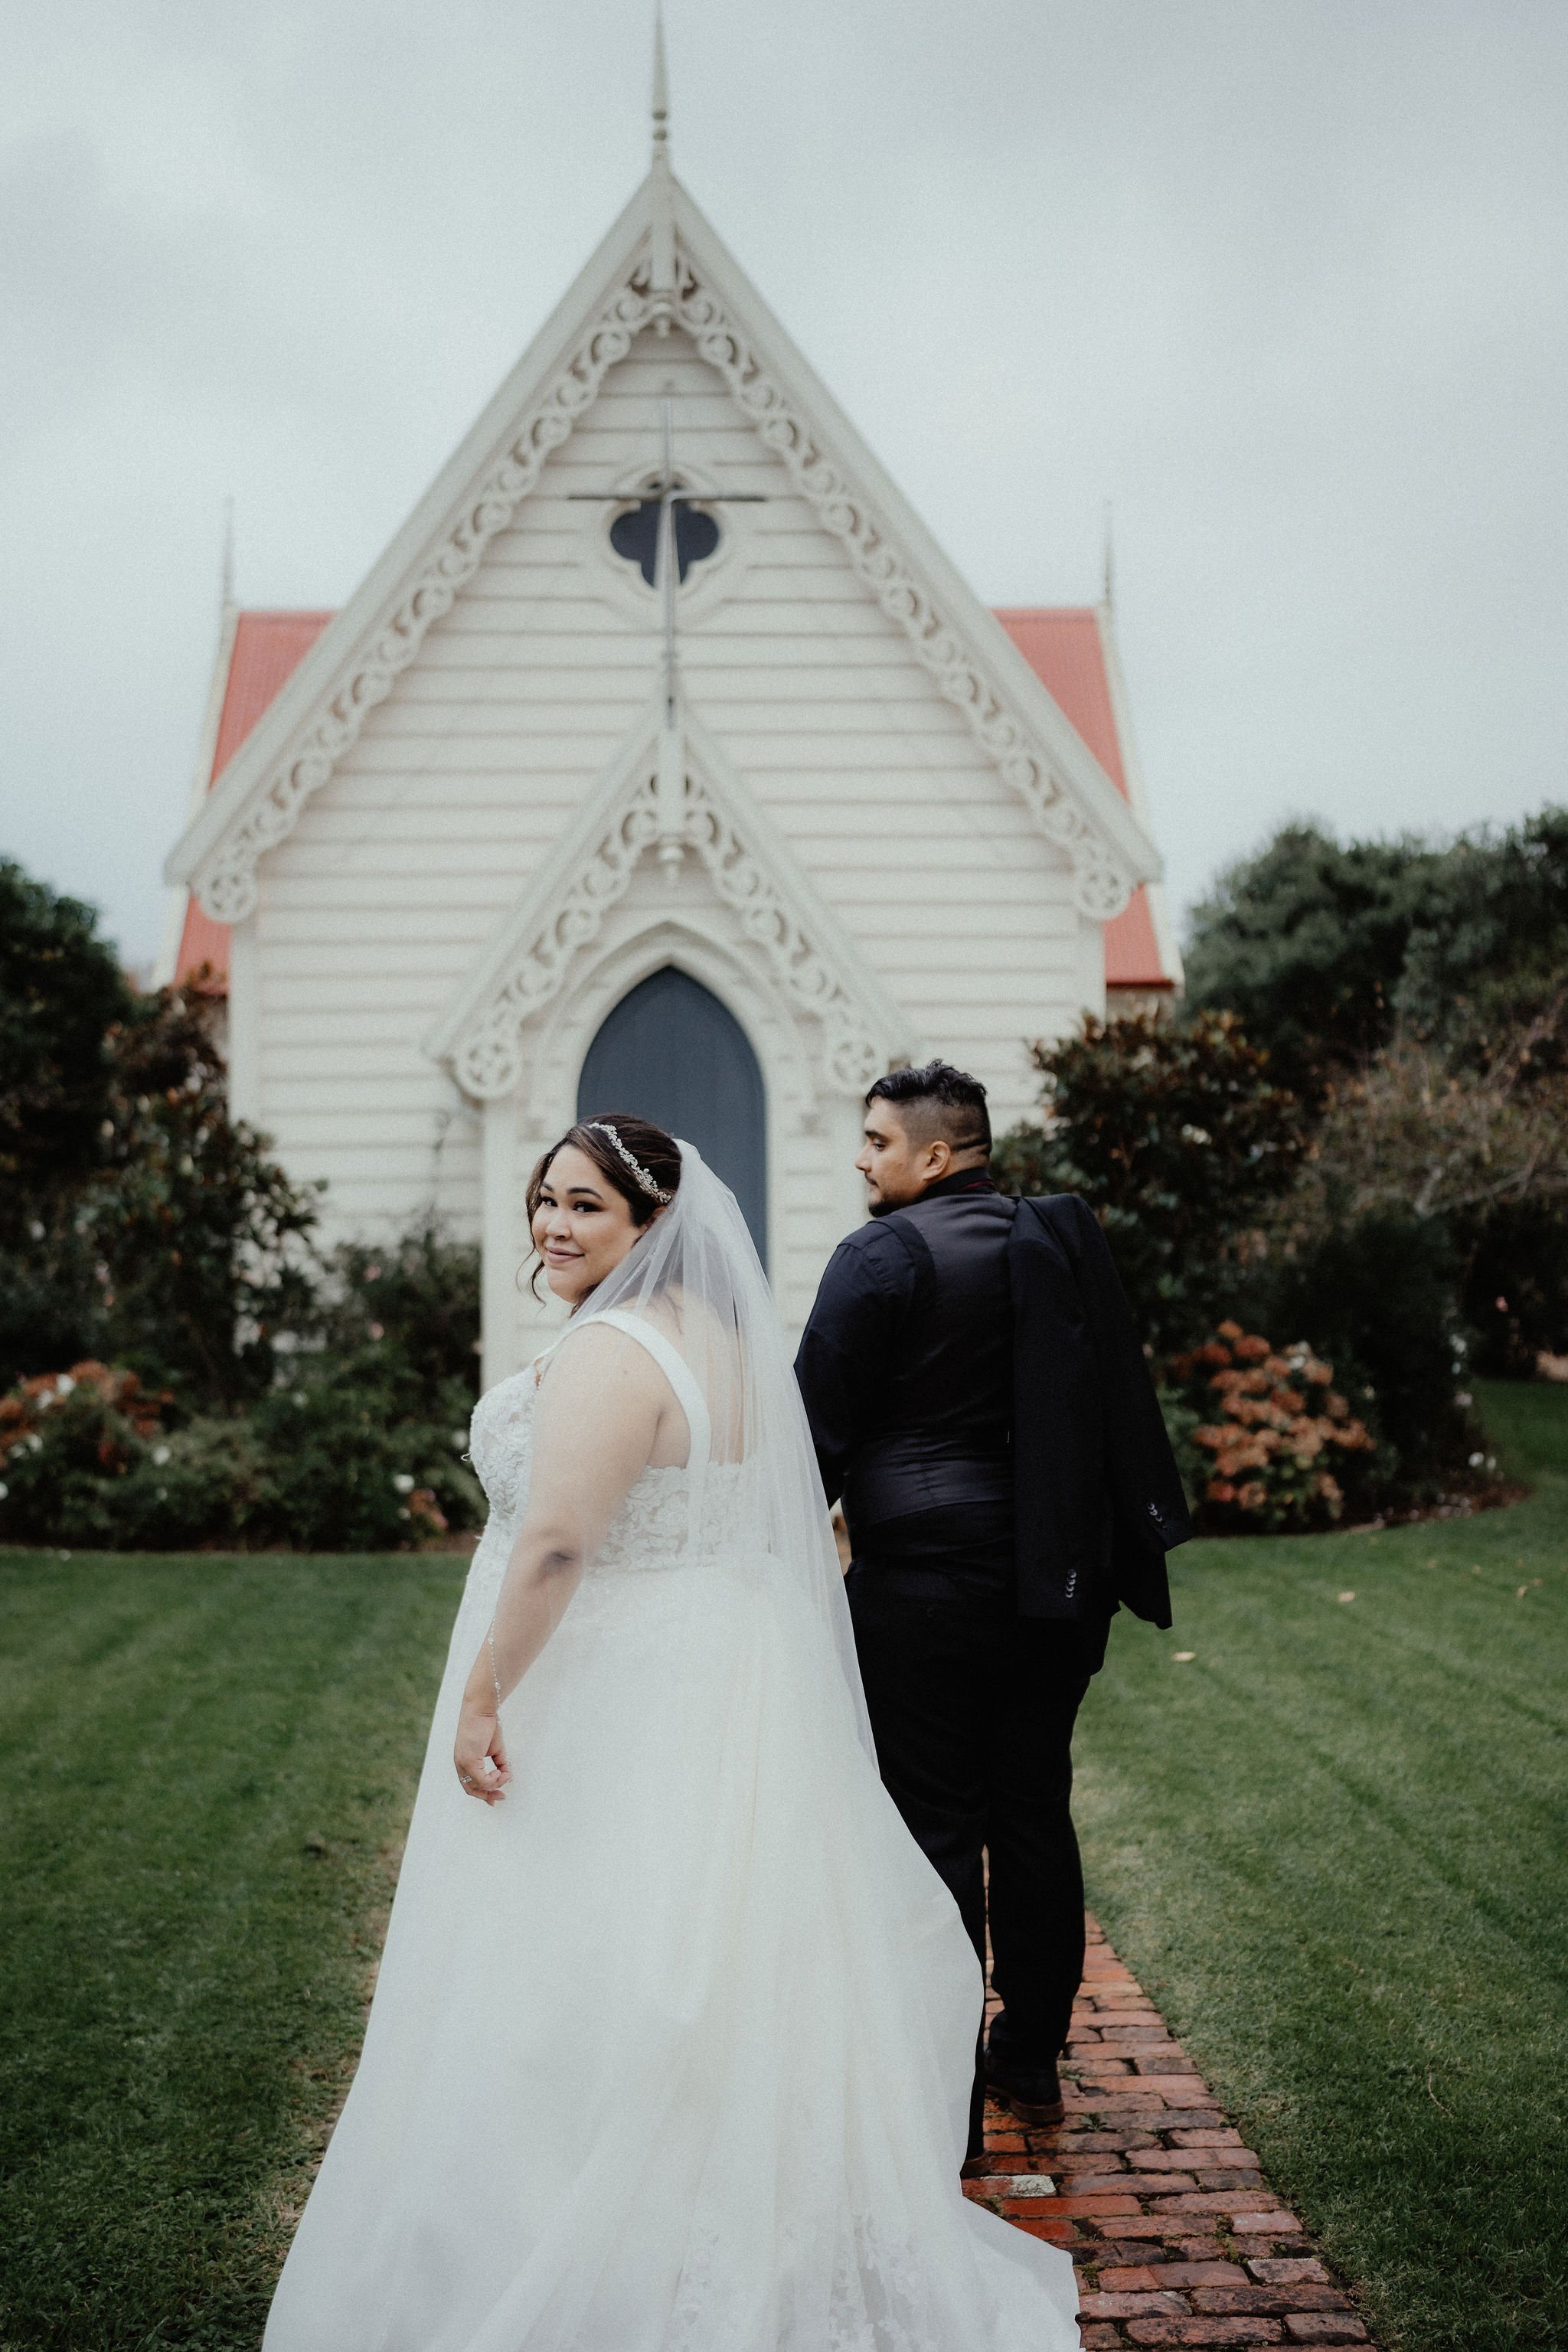 Auckland wedding videographer